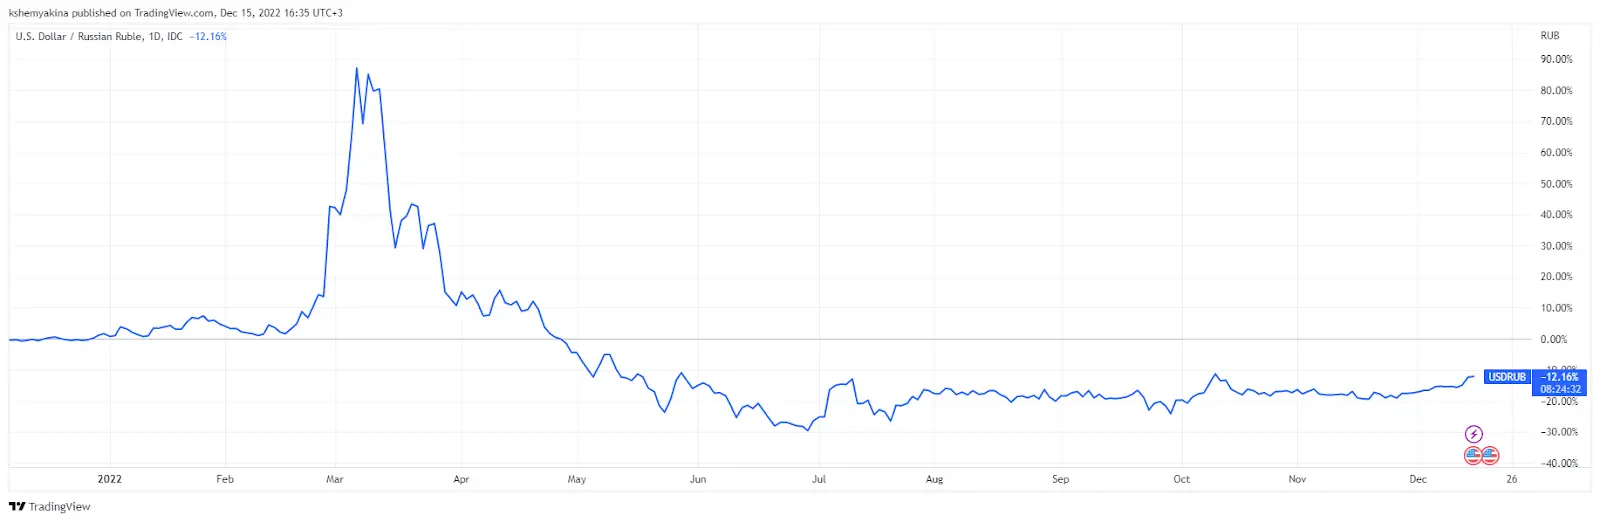 USD/RUB rates Tradingview chart